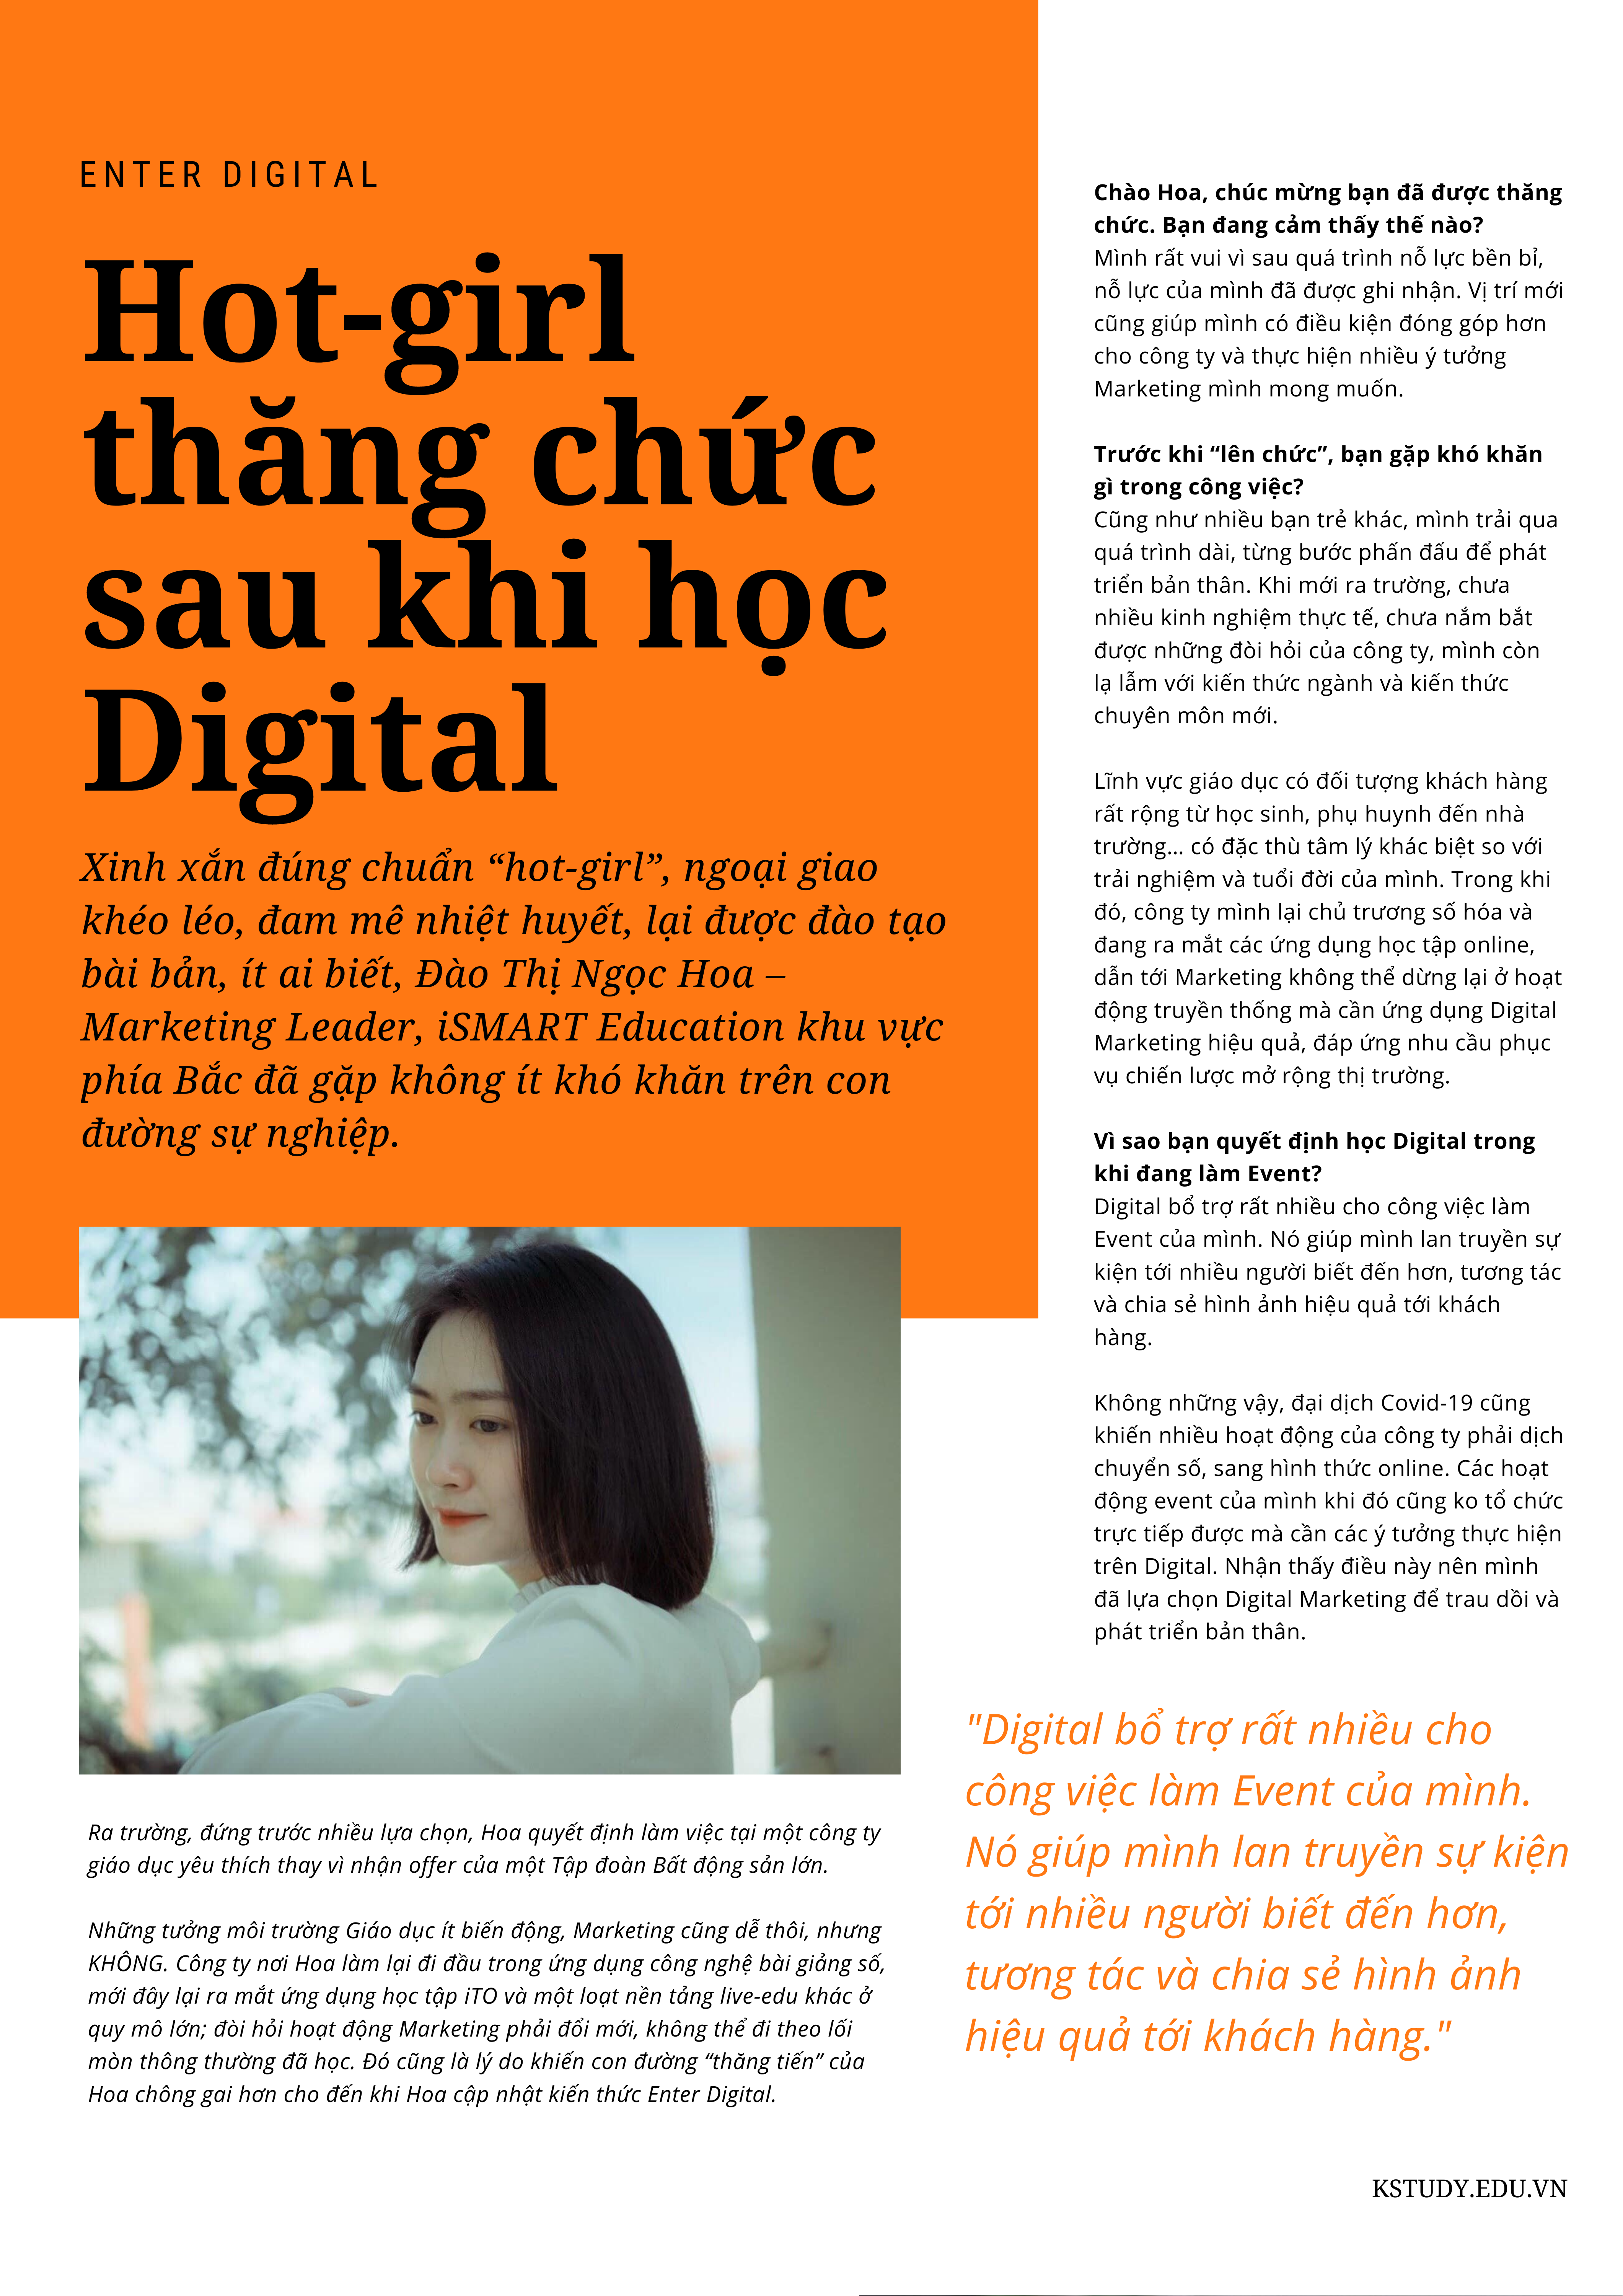 Hot-girl-thang-chuc-sau-khi-hoc-digital